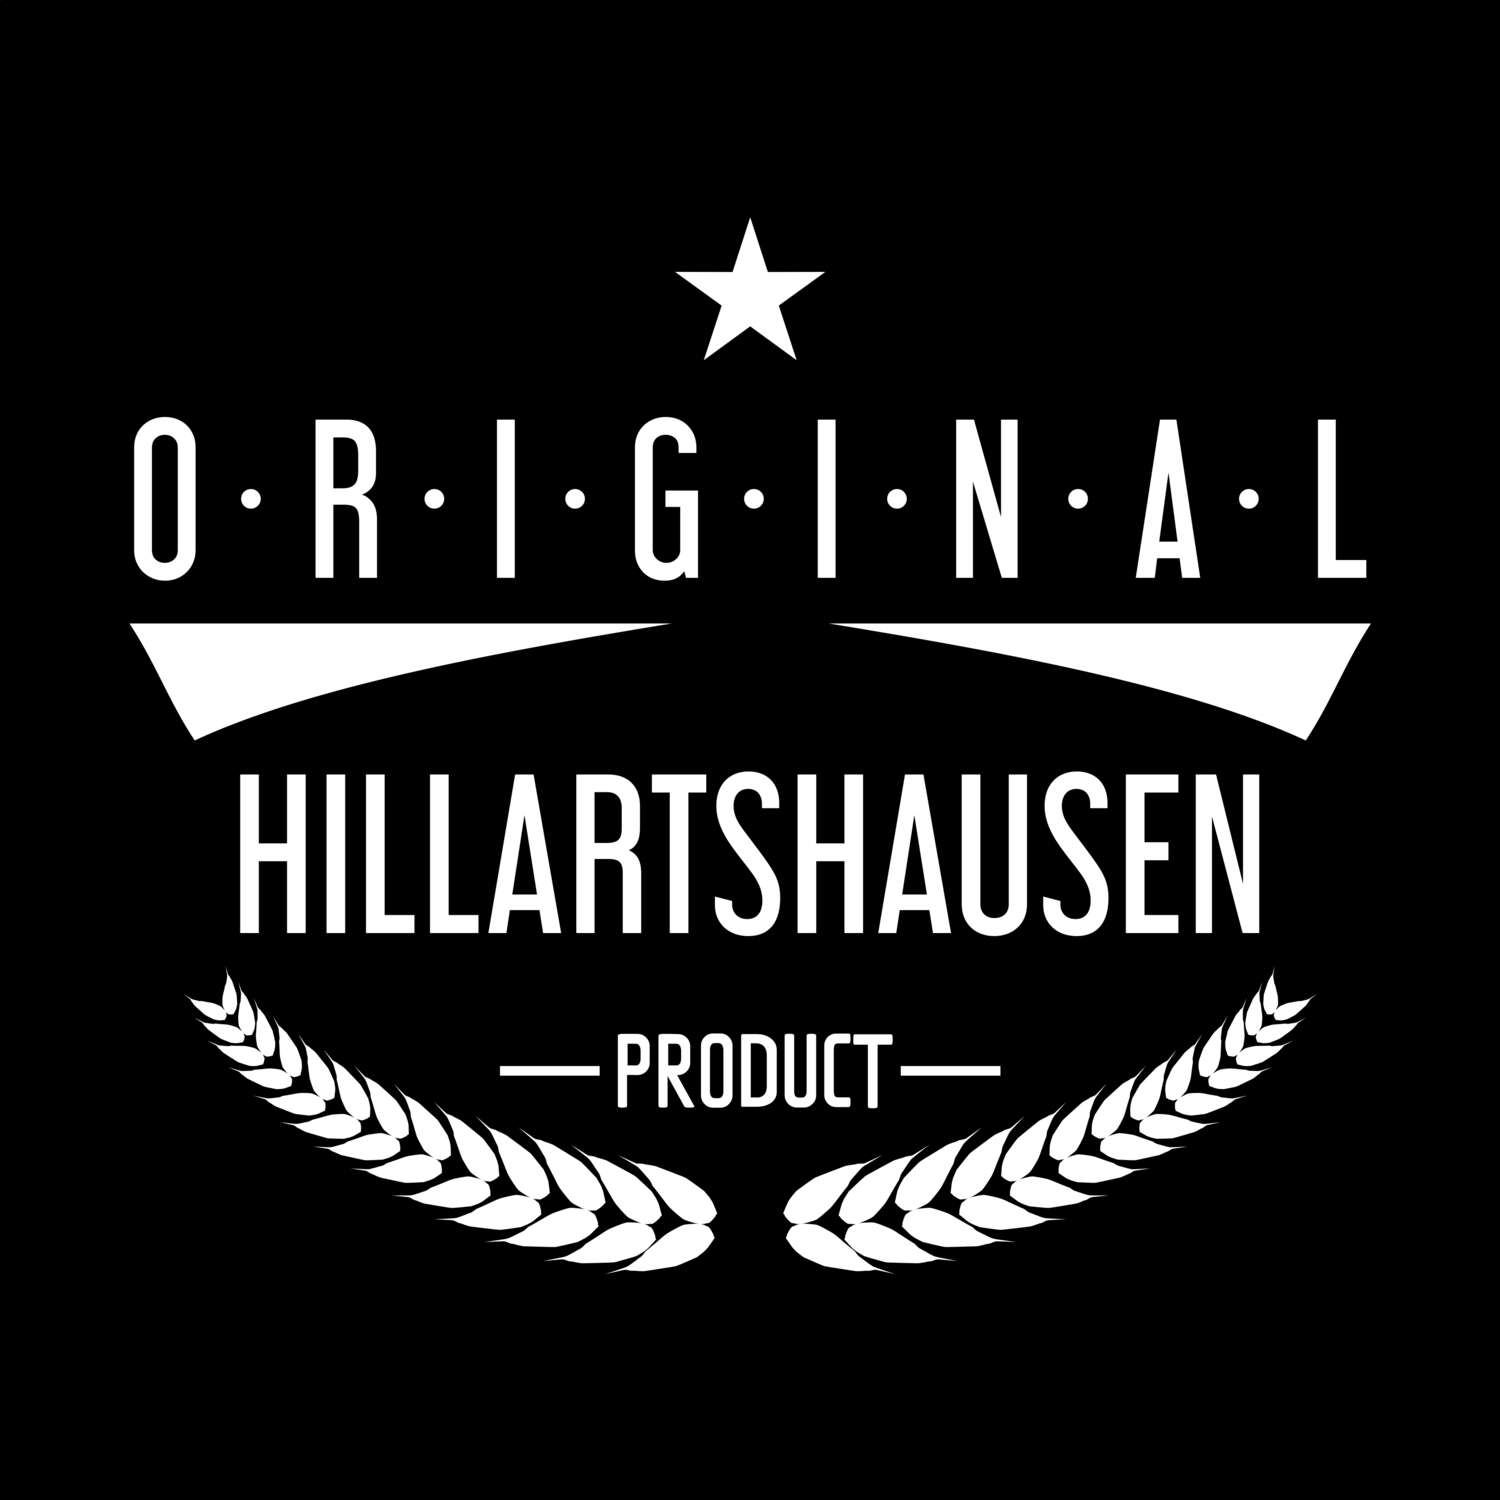 Hillartshausen T-Shirt »Original Product«